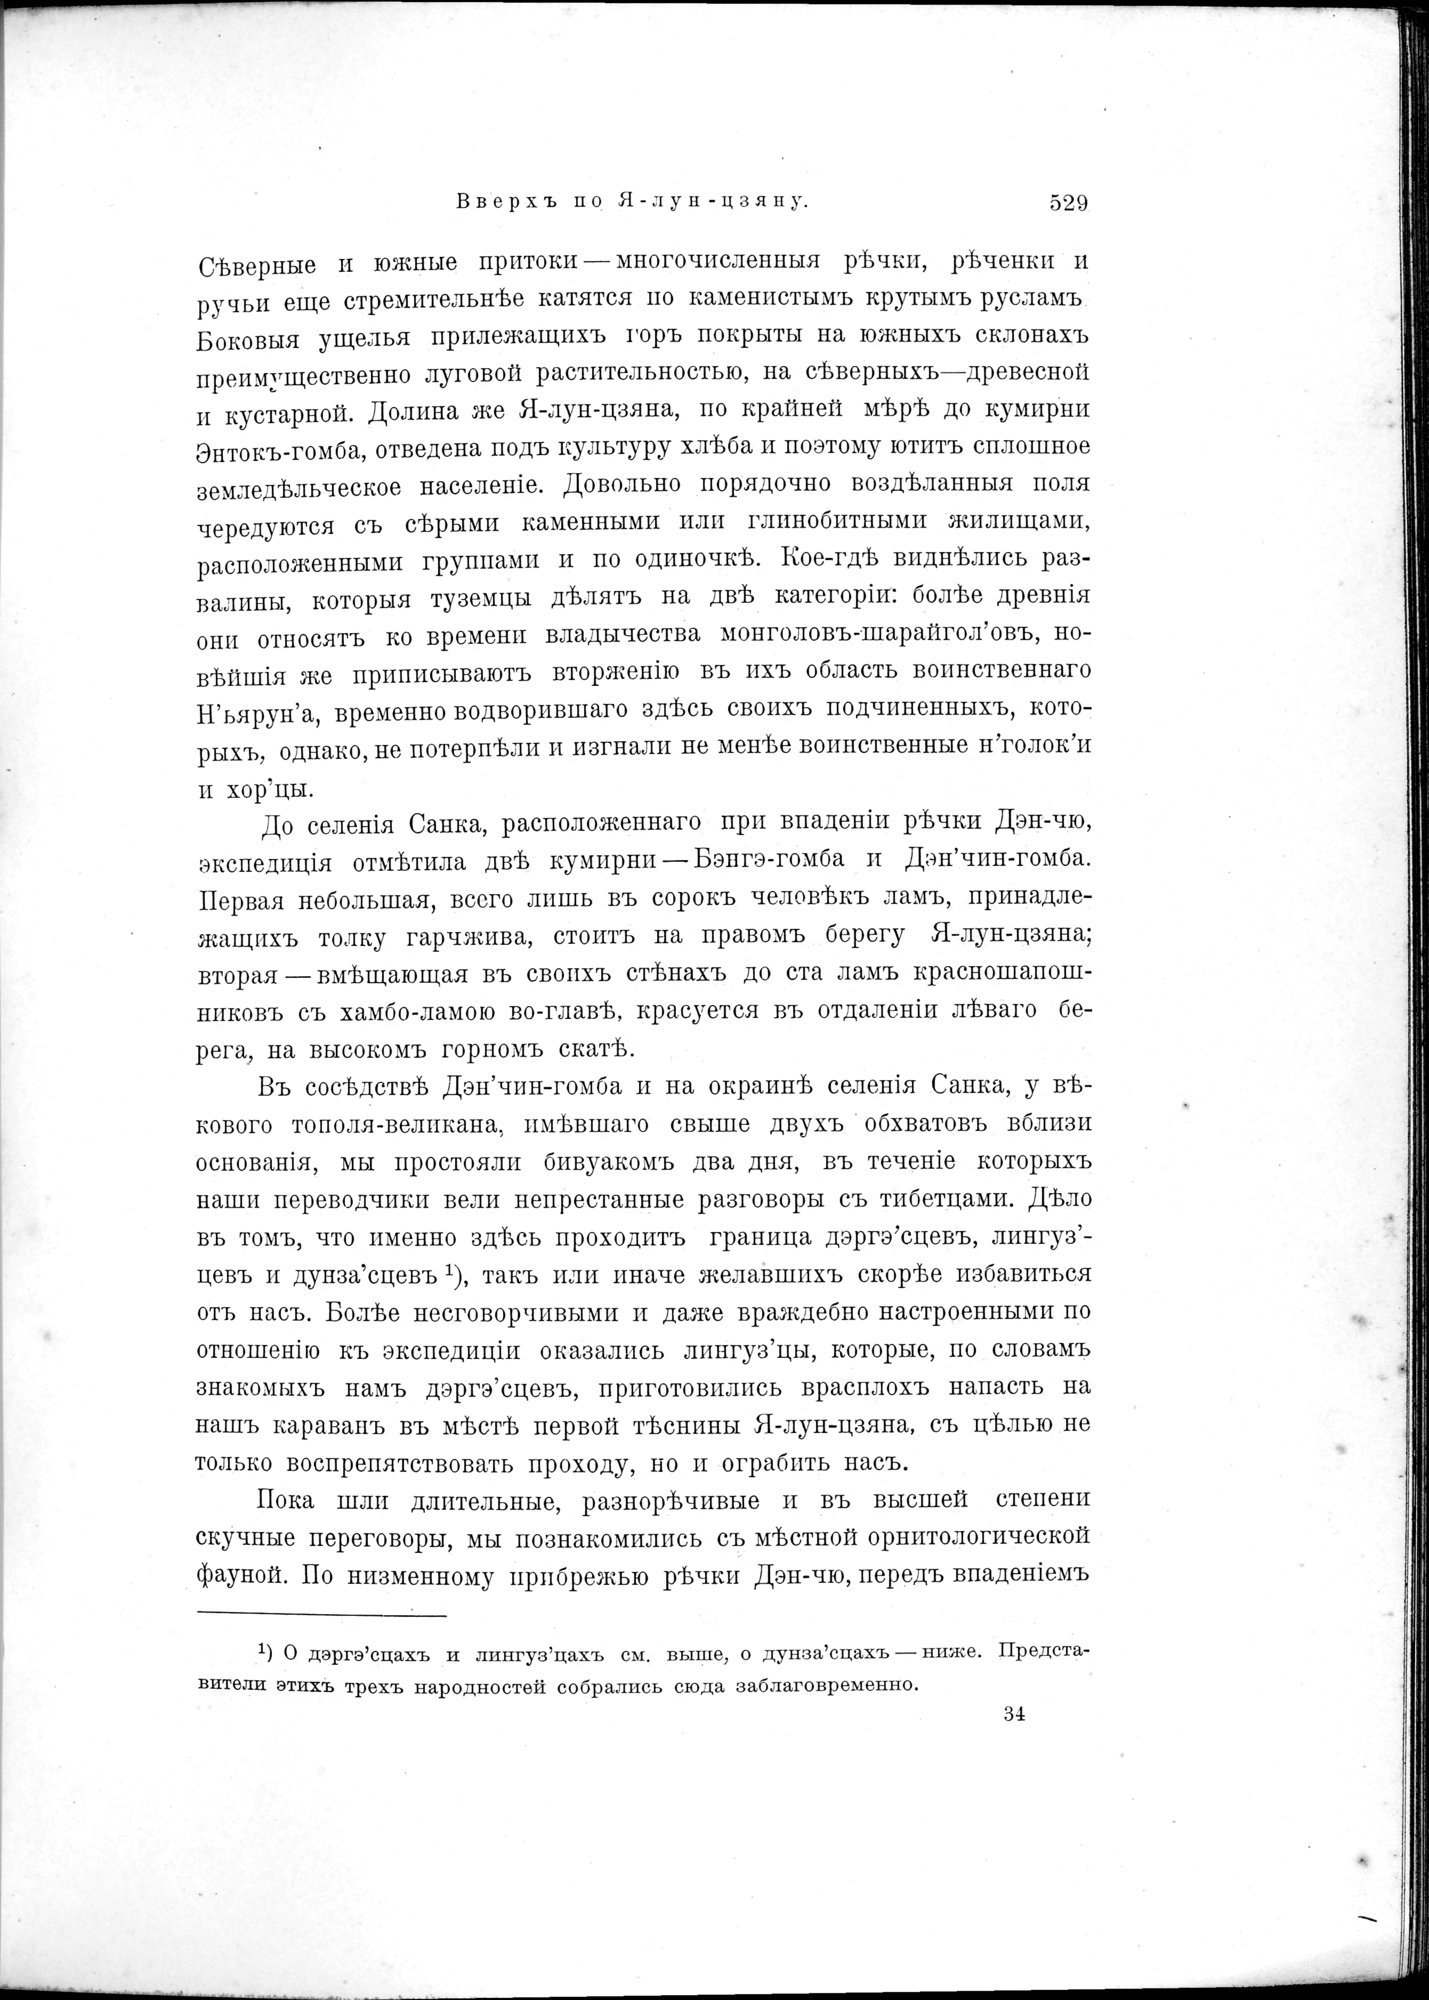 Mongoliia i Kam : vol.2 / Page 349 (Grayscale High Resolution Image)